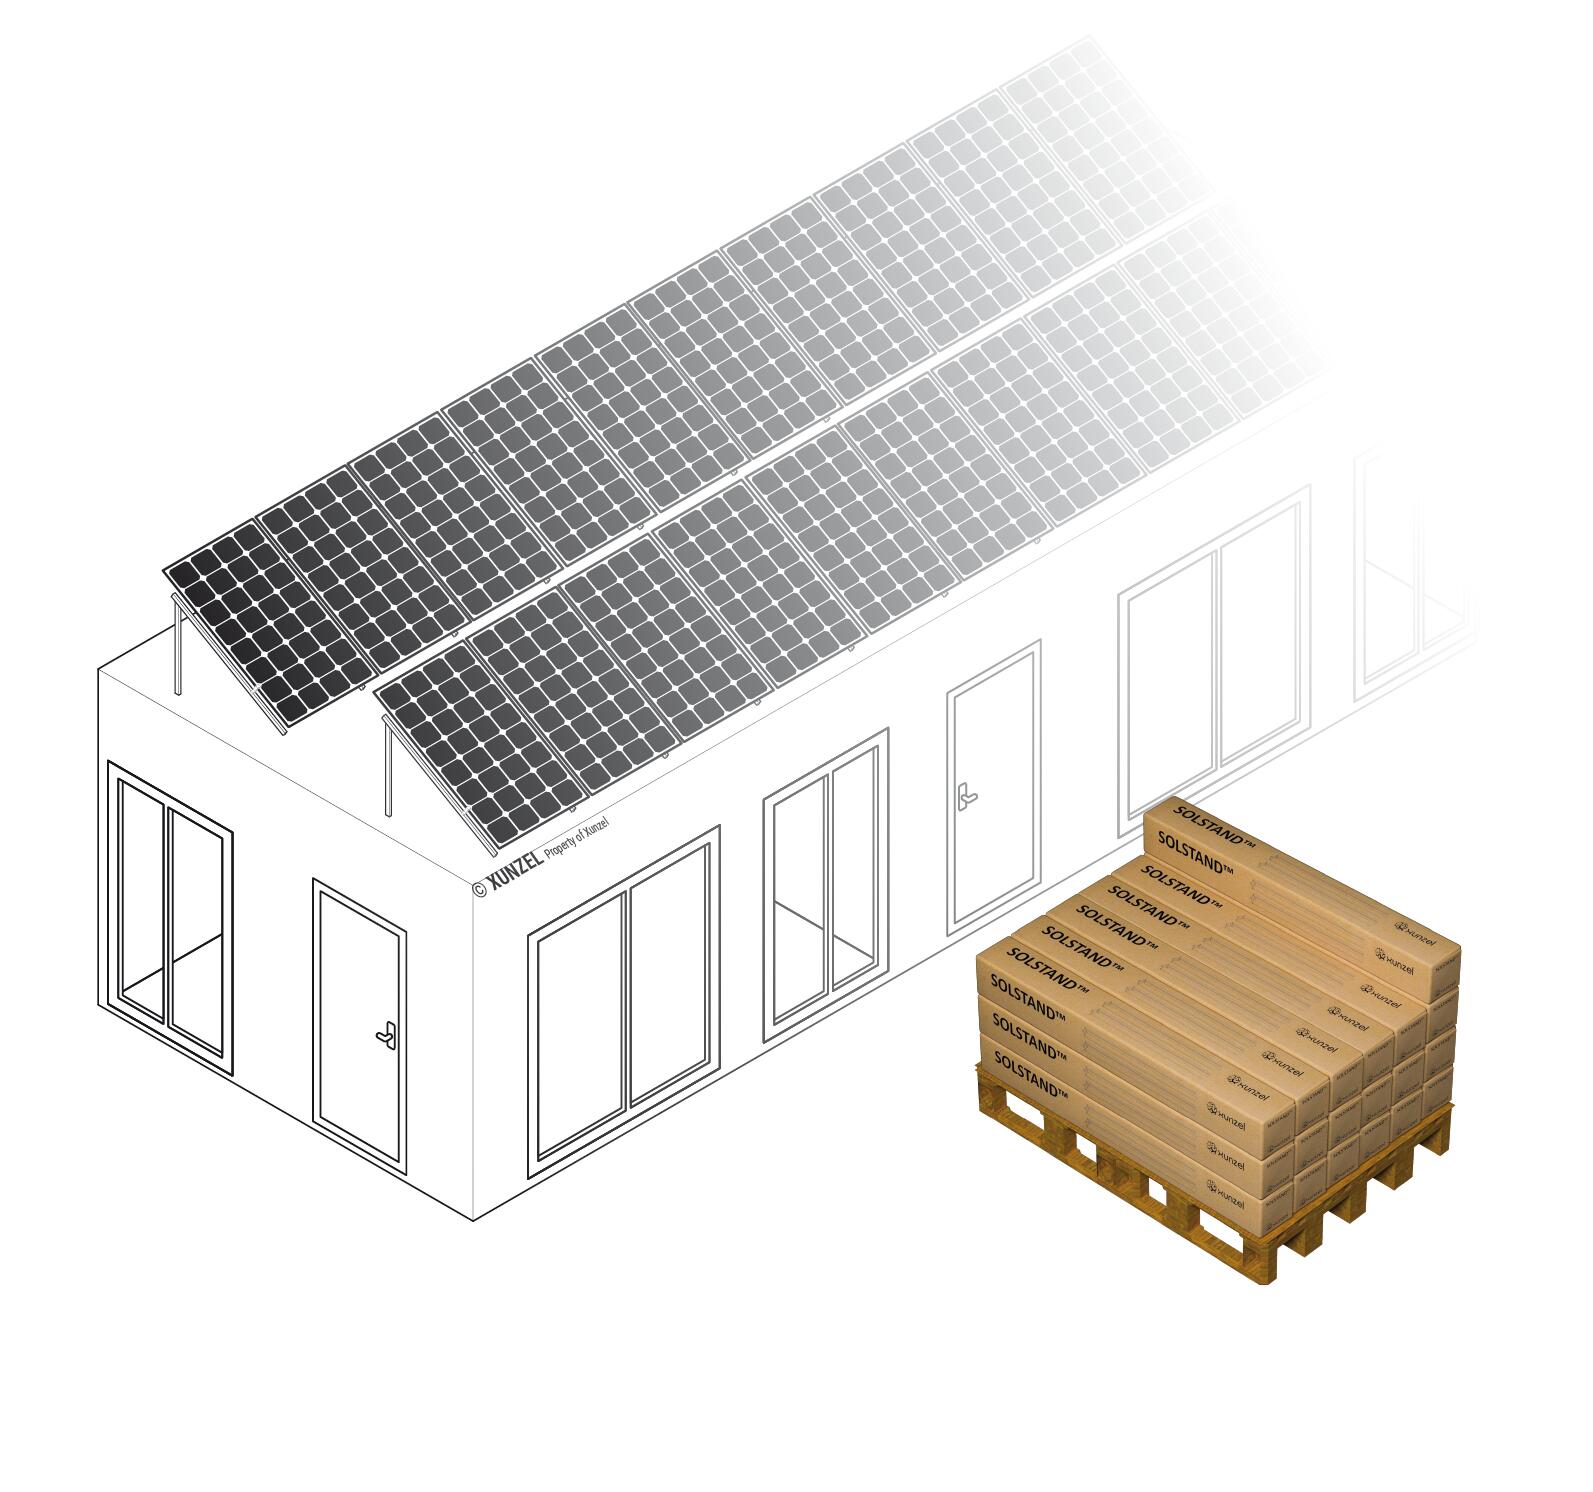 Soporte suelo/cubierta plana solstand-60g-xxl para 60 paneles solarpower-425w